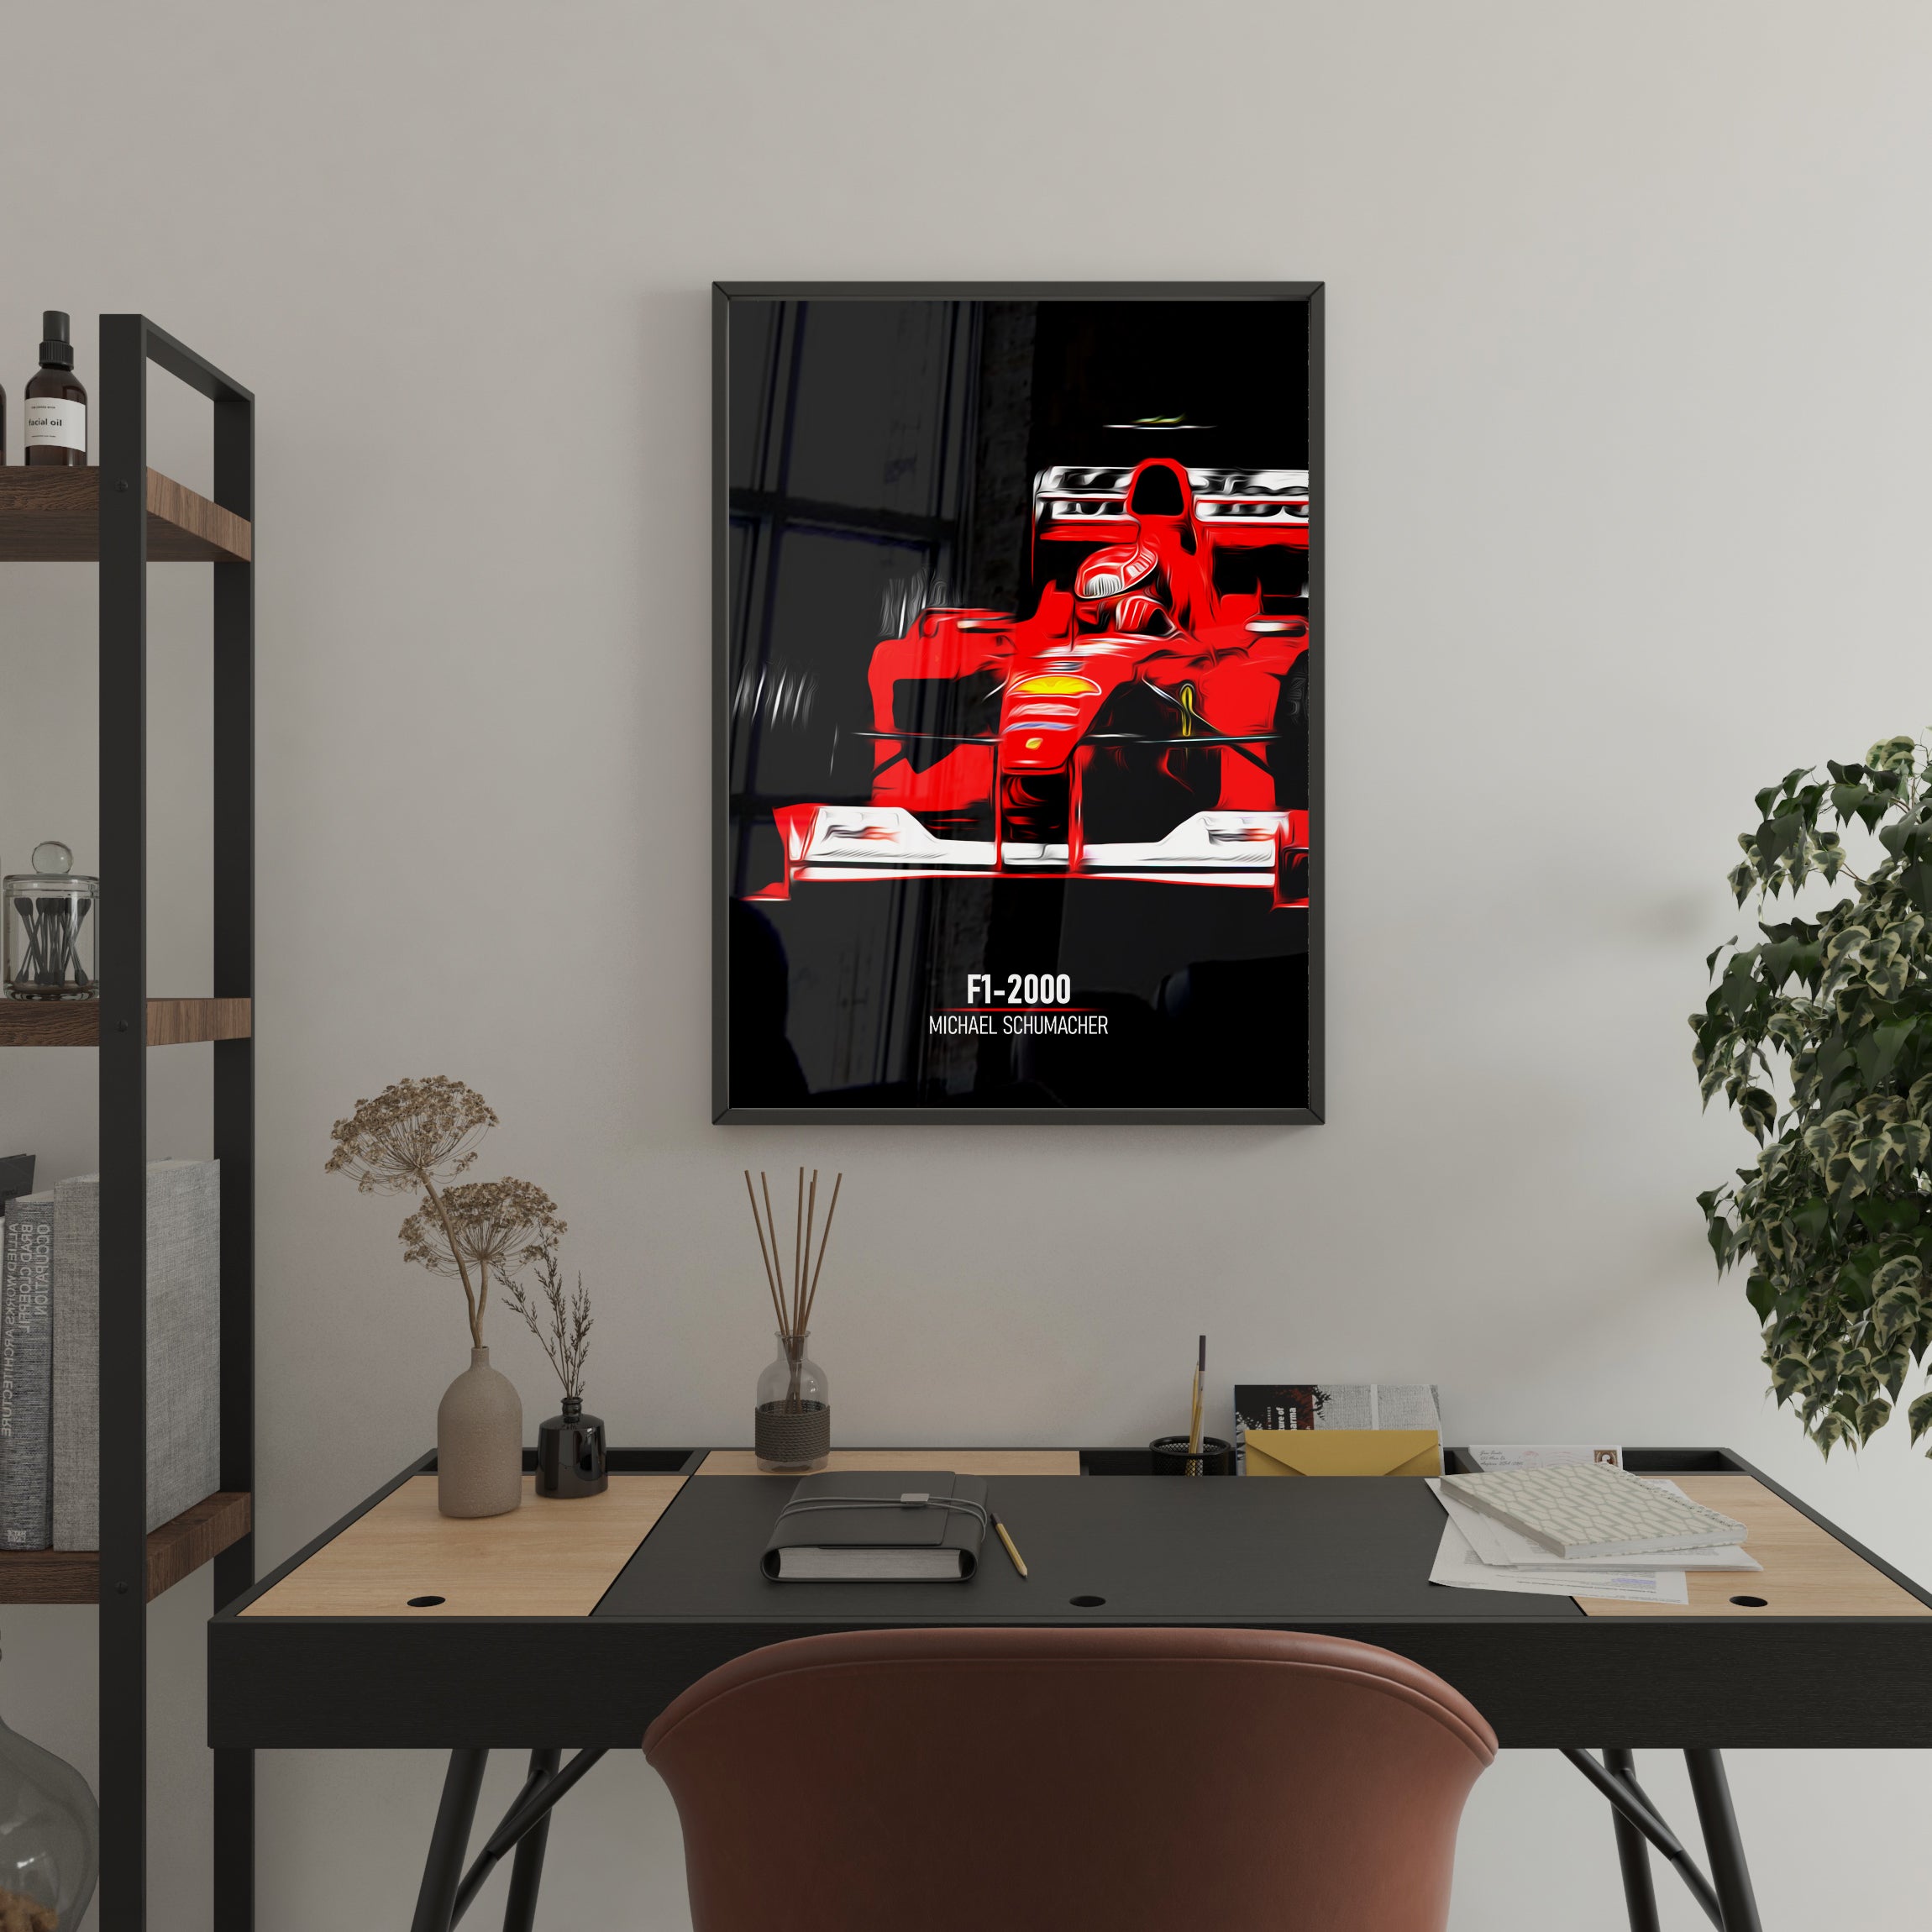 Ferrari F1-2000, Michael Schumacher - Formula 1 Framed Poster Print